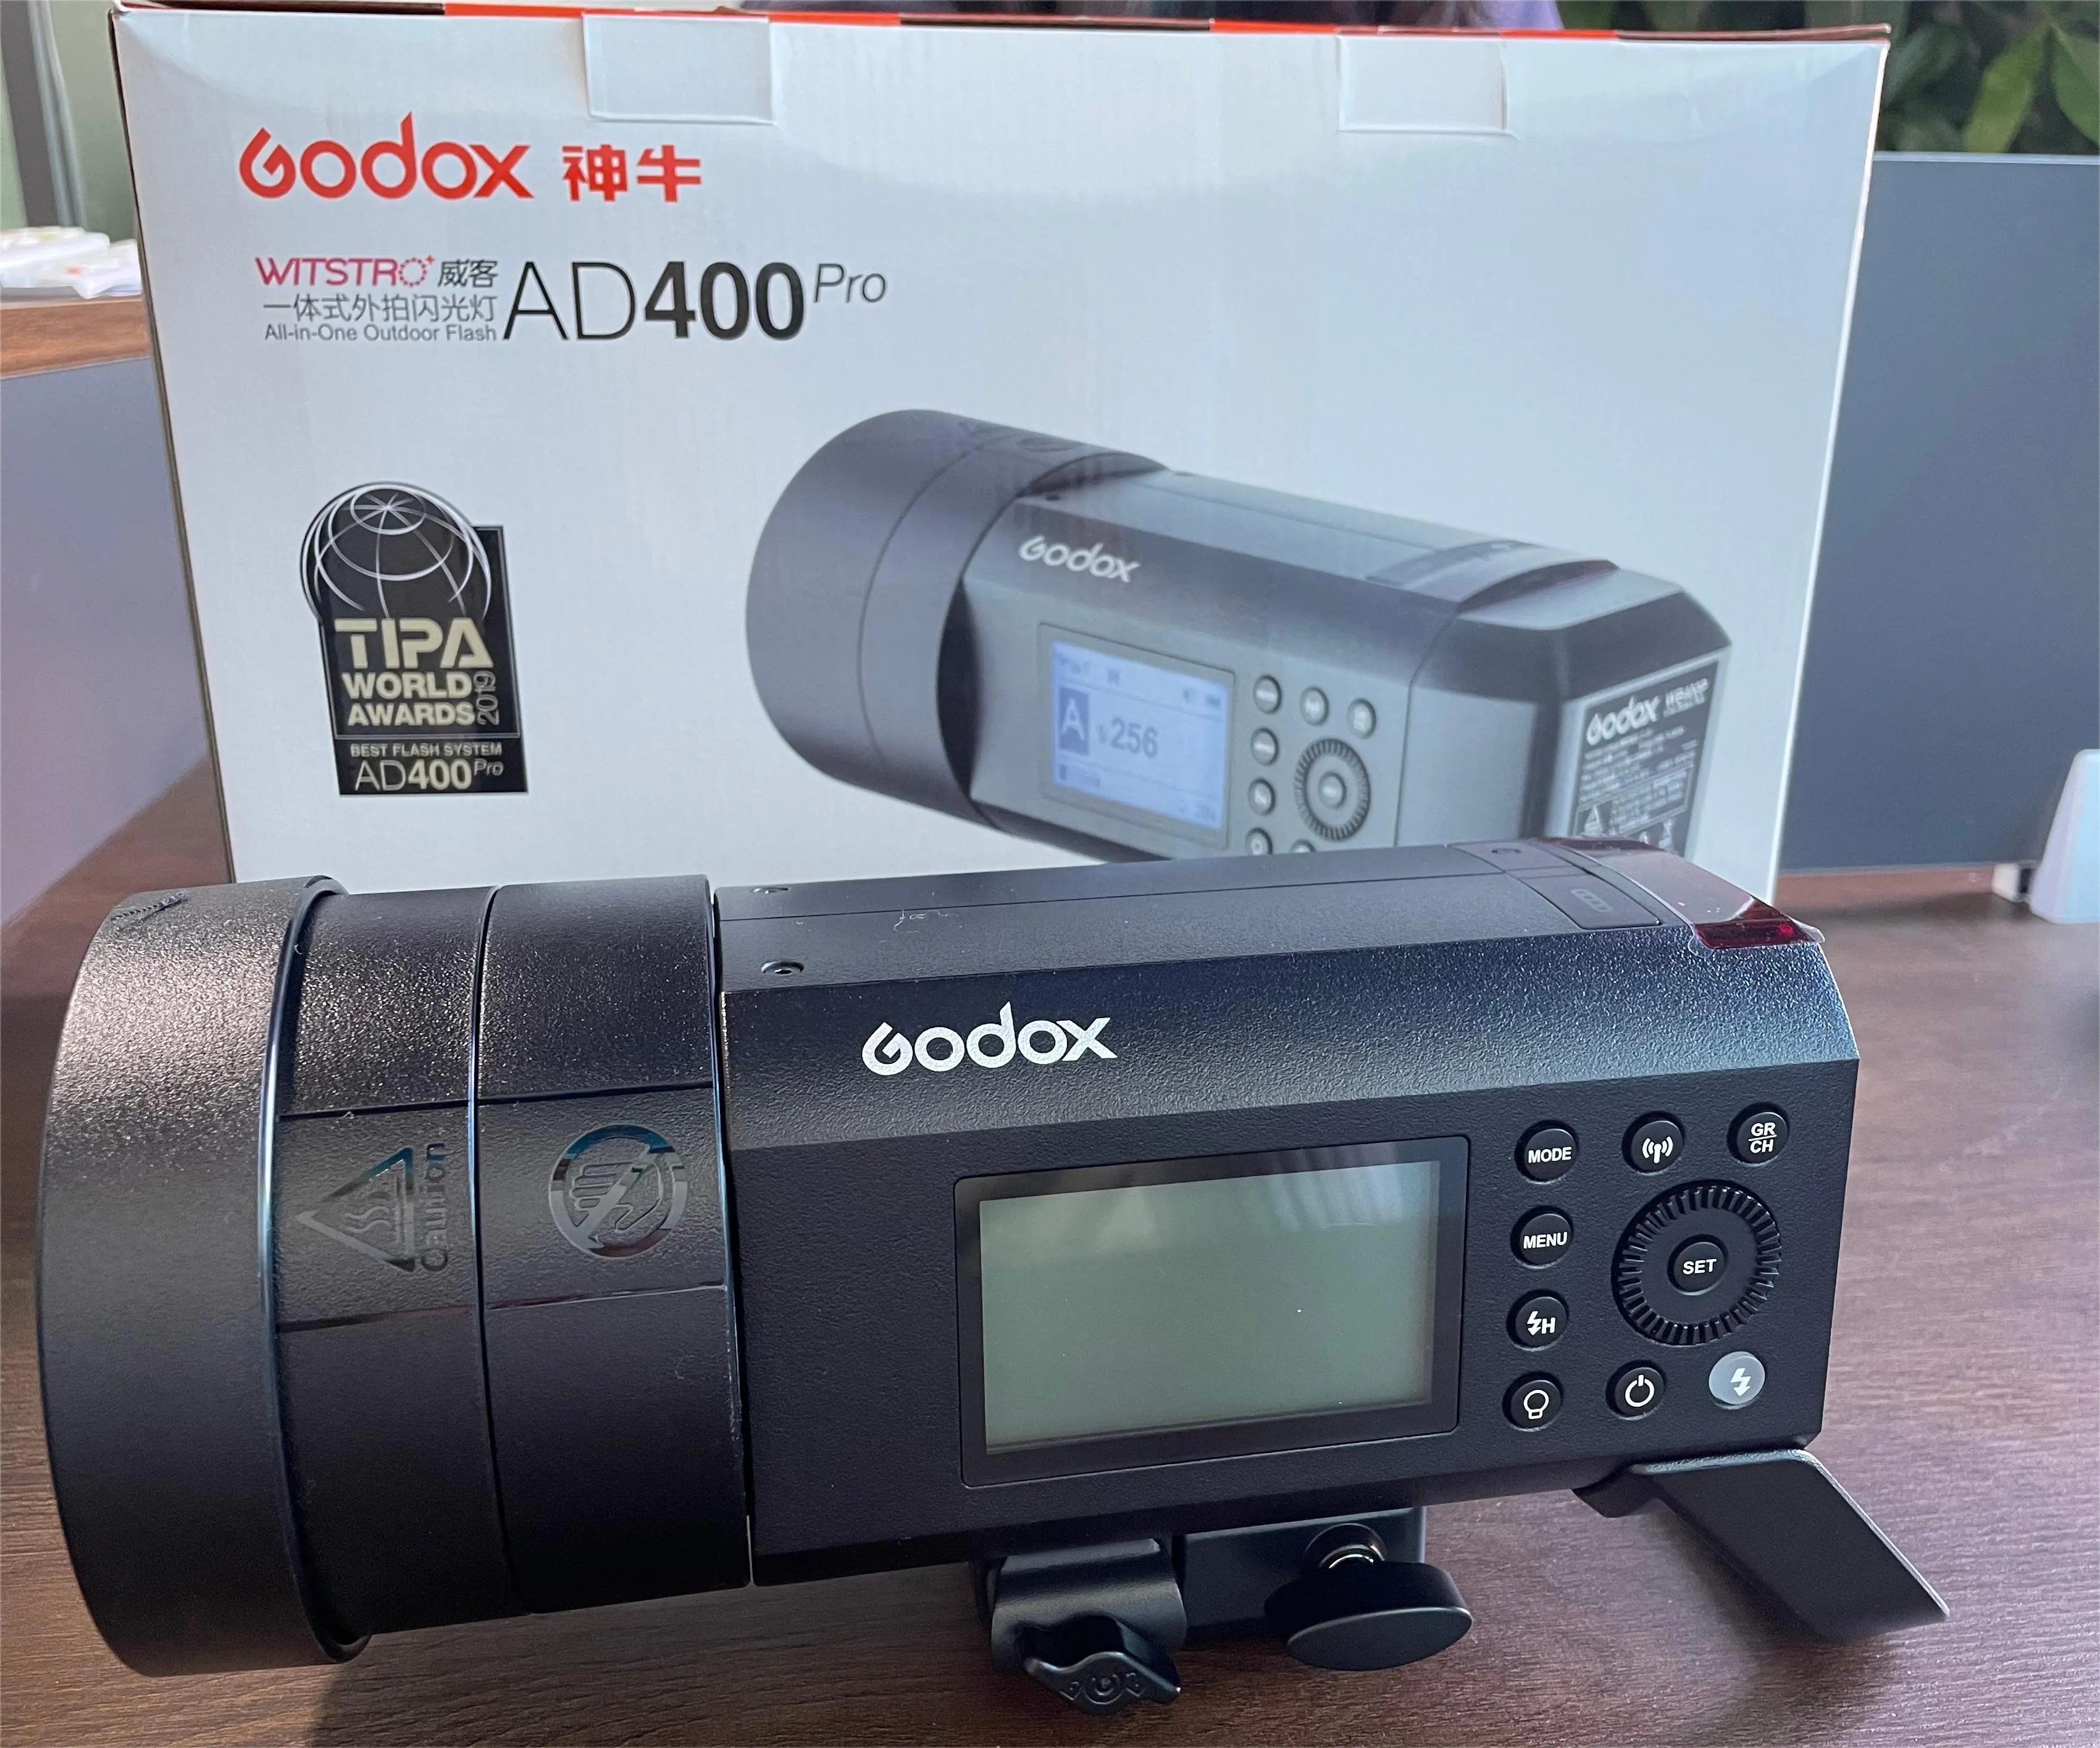 G-odox Ad400pro กล้องแฟลช 400w 2.4g Ttl Hss สตูดิโอแฟลชกลางแจ้ง 2600mah แบตเตอรี่ Li-Ion แบบชาร์จไฟได้